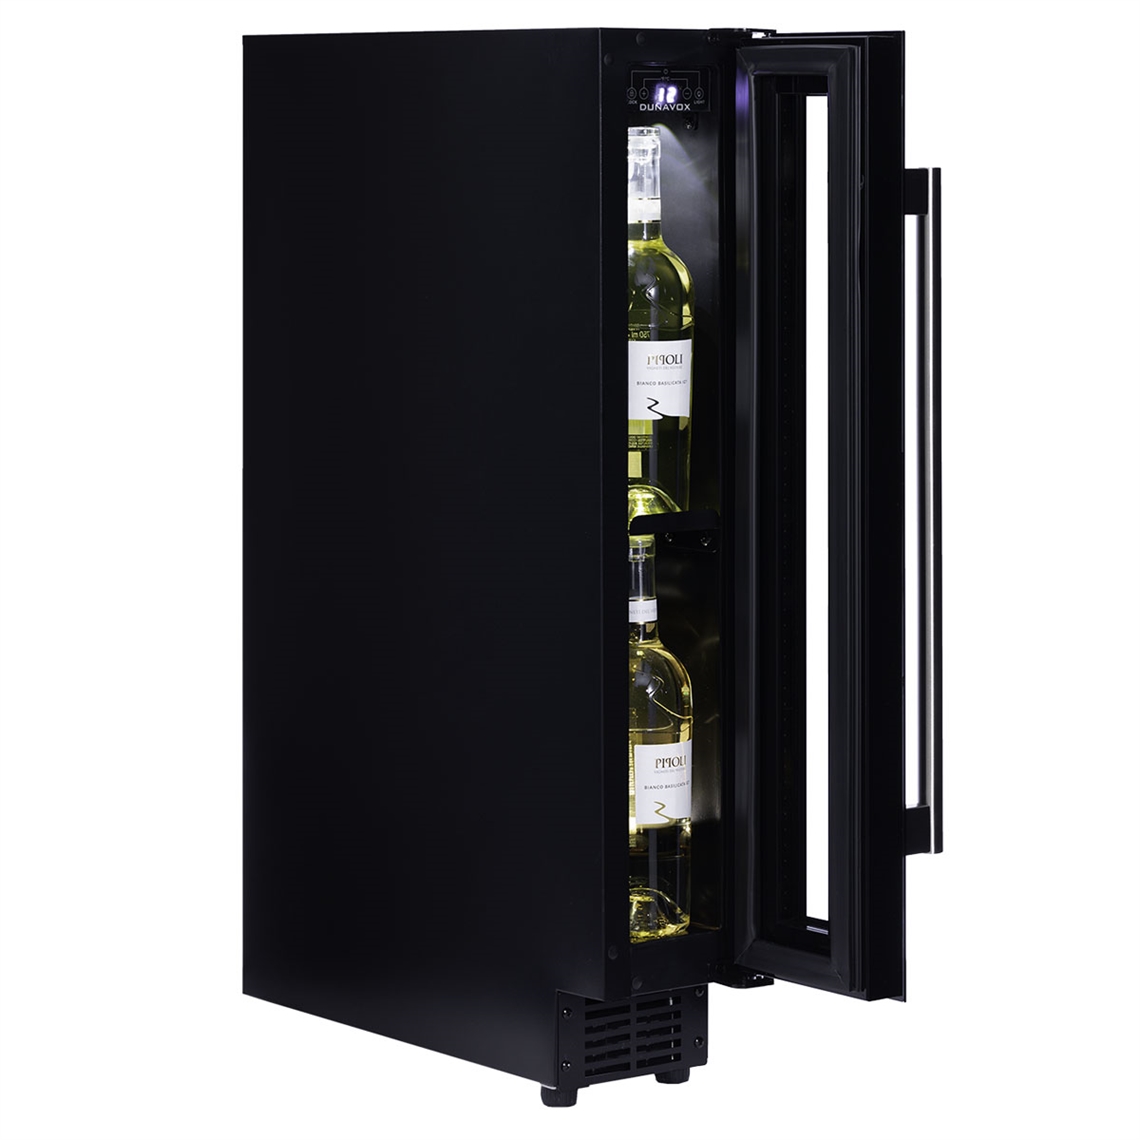 Dunavox Wine Cabinet Flow - Single Temperature Built-In Under Counter - Black DAUF-9.22B